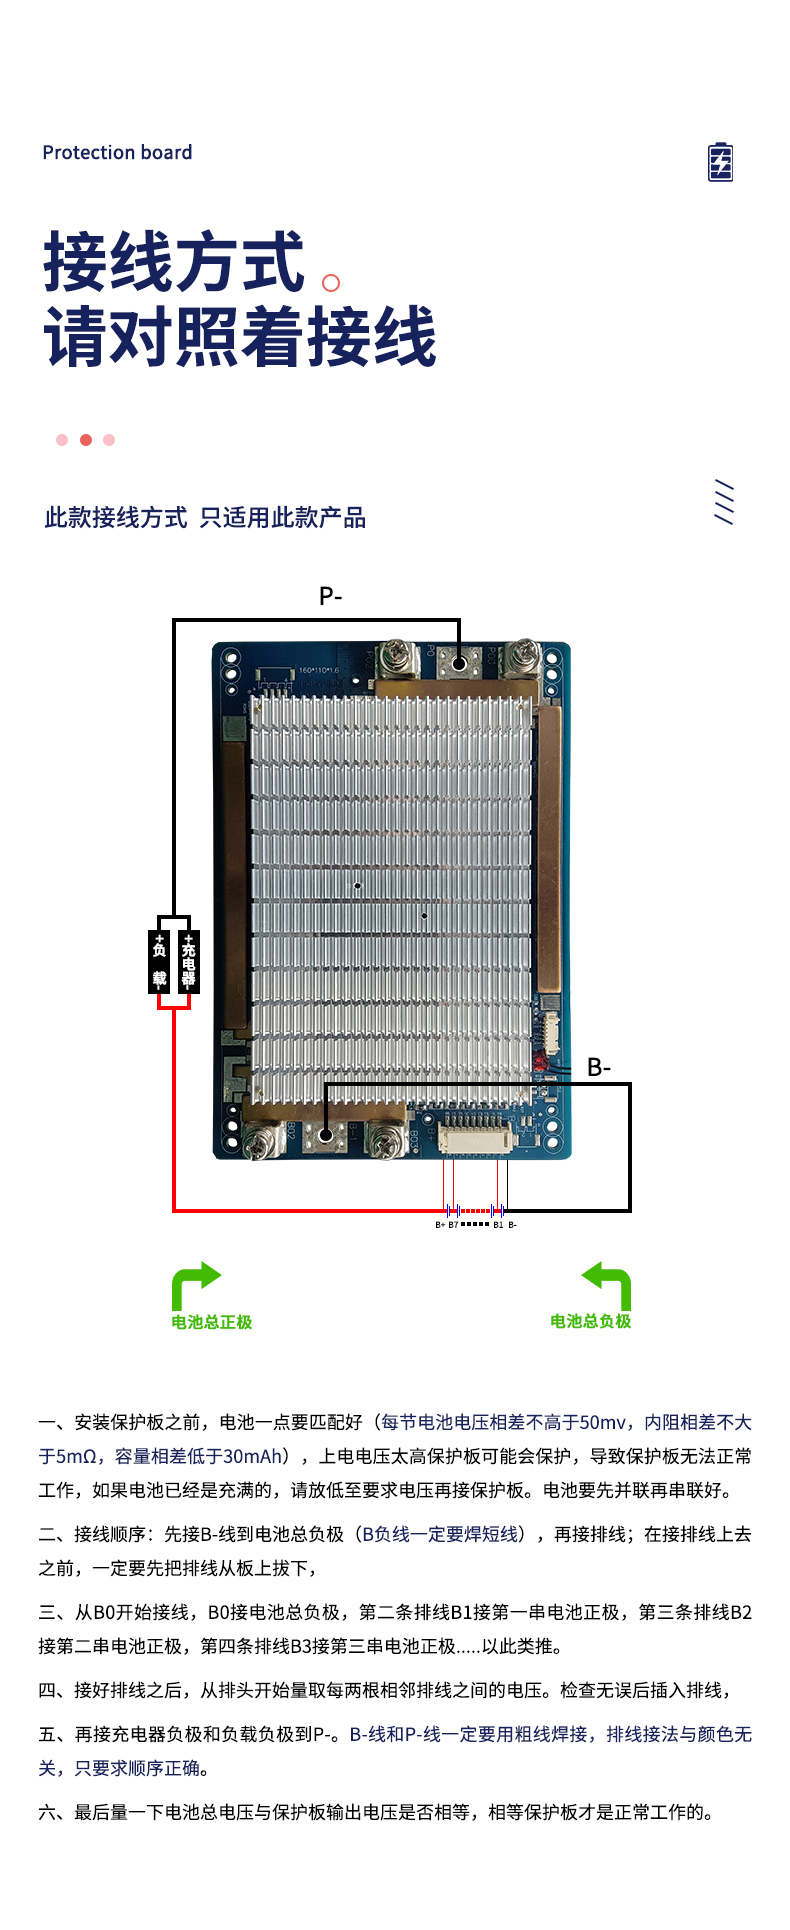 D1170 8串120A储能锂电池保护板(图2)